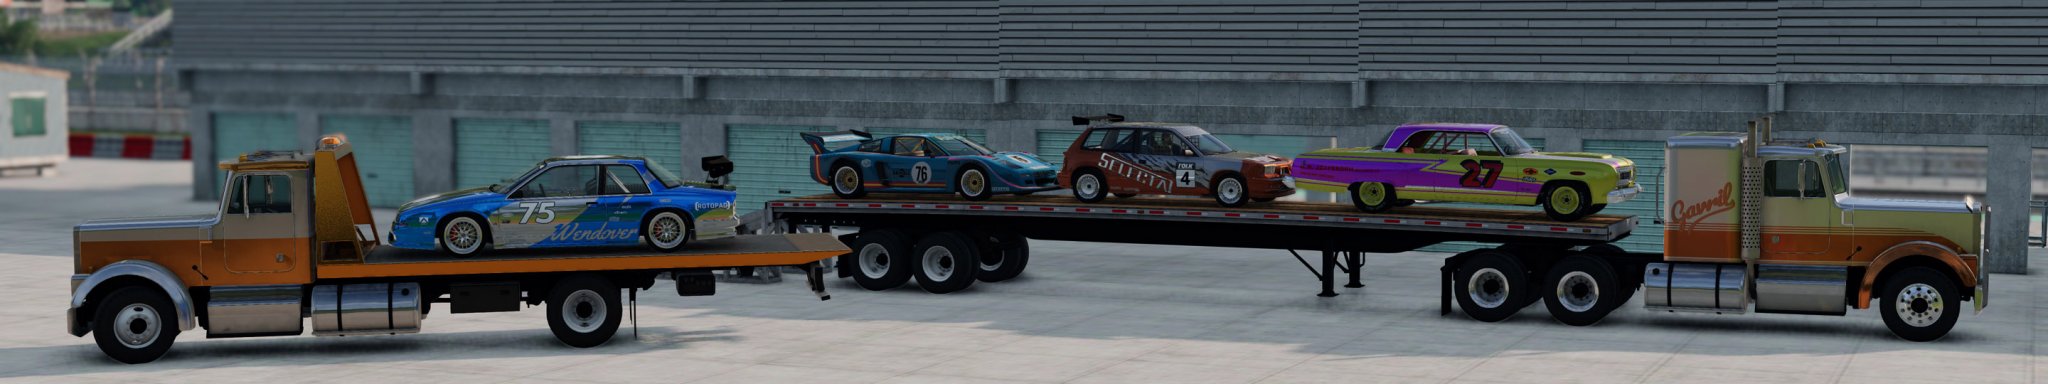 2 BeamNG 2 TRUCKS with RACE CARS copy.jpg